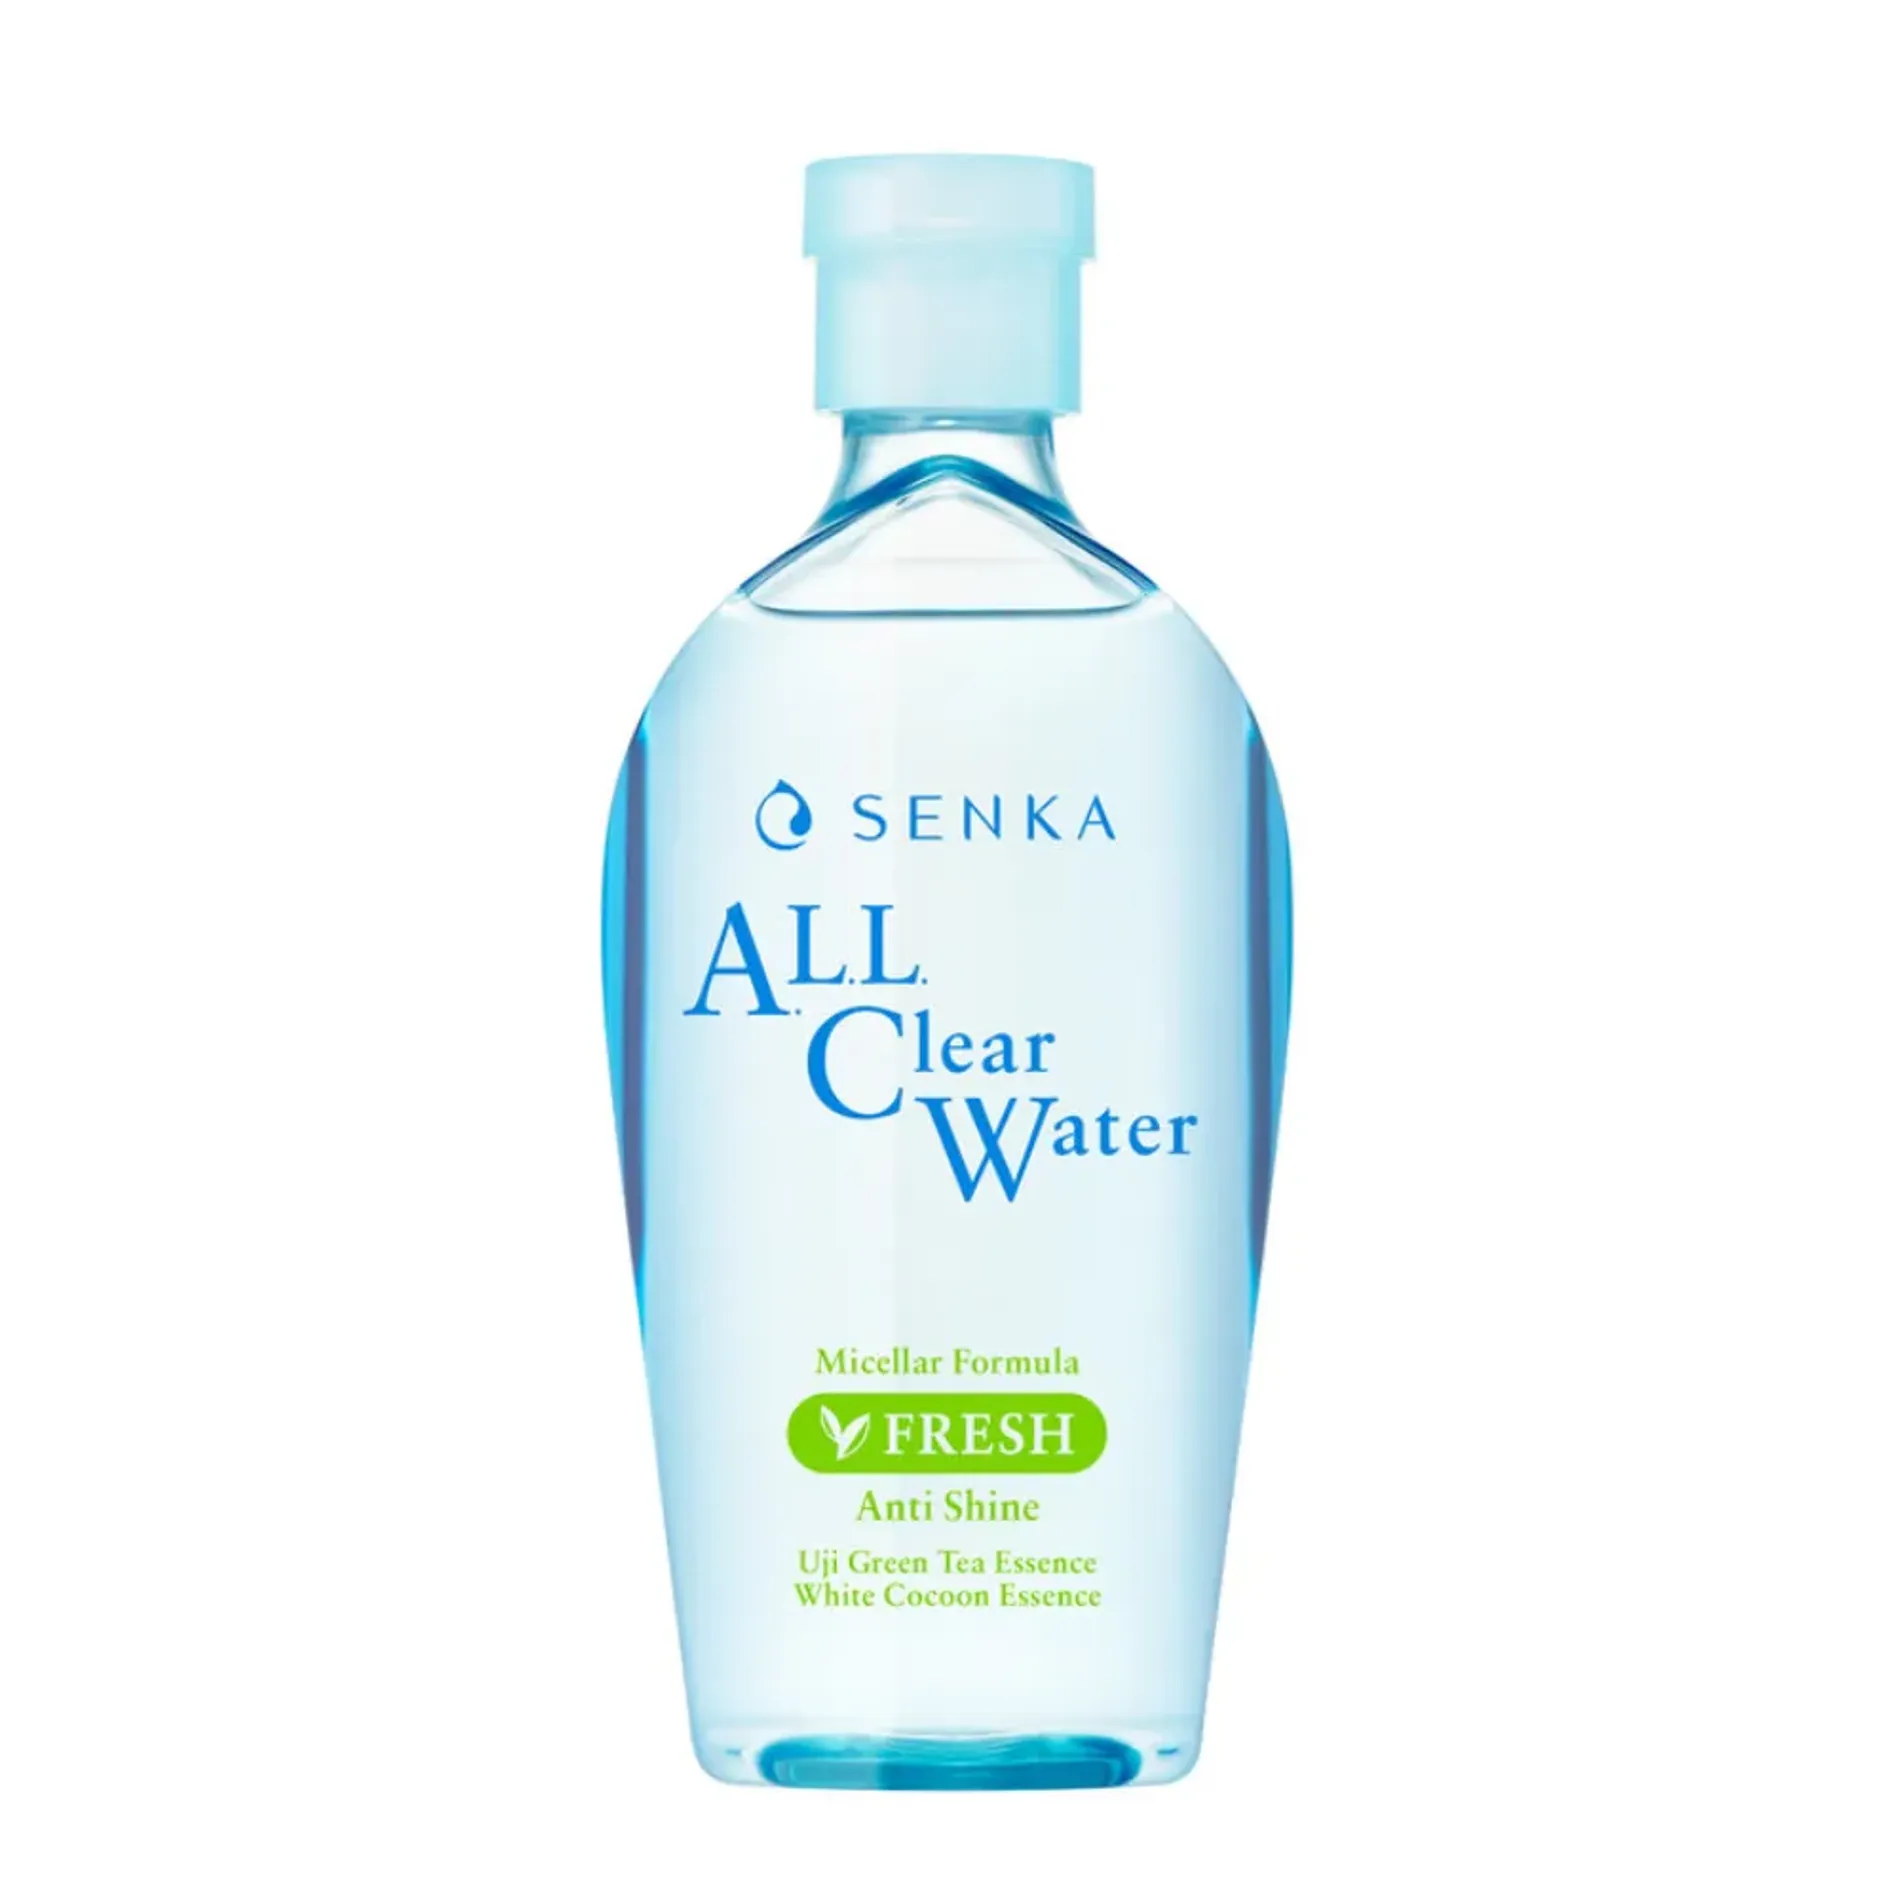 nuoc-tay-trang-senka-all-clear-water-micellar-formula-fresh-70ml-1